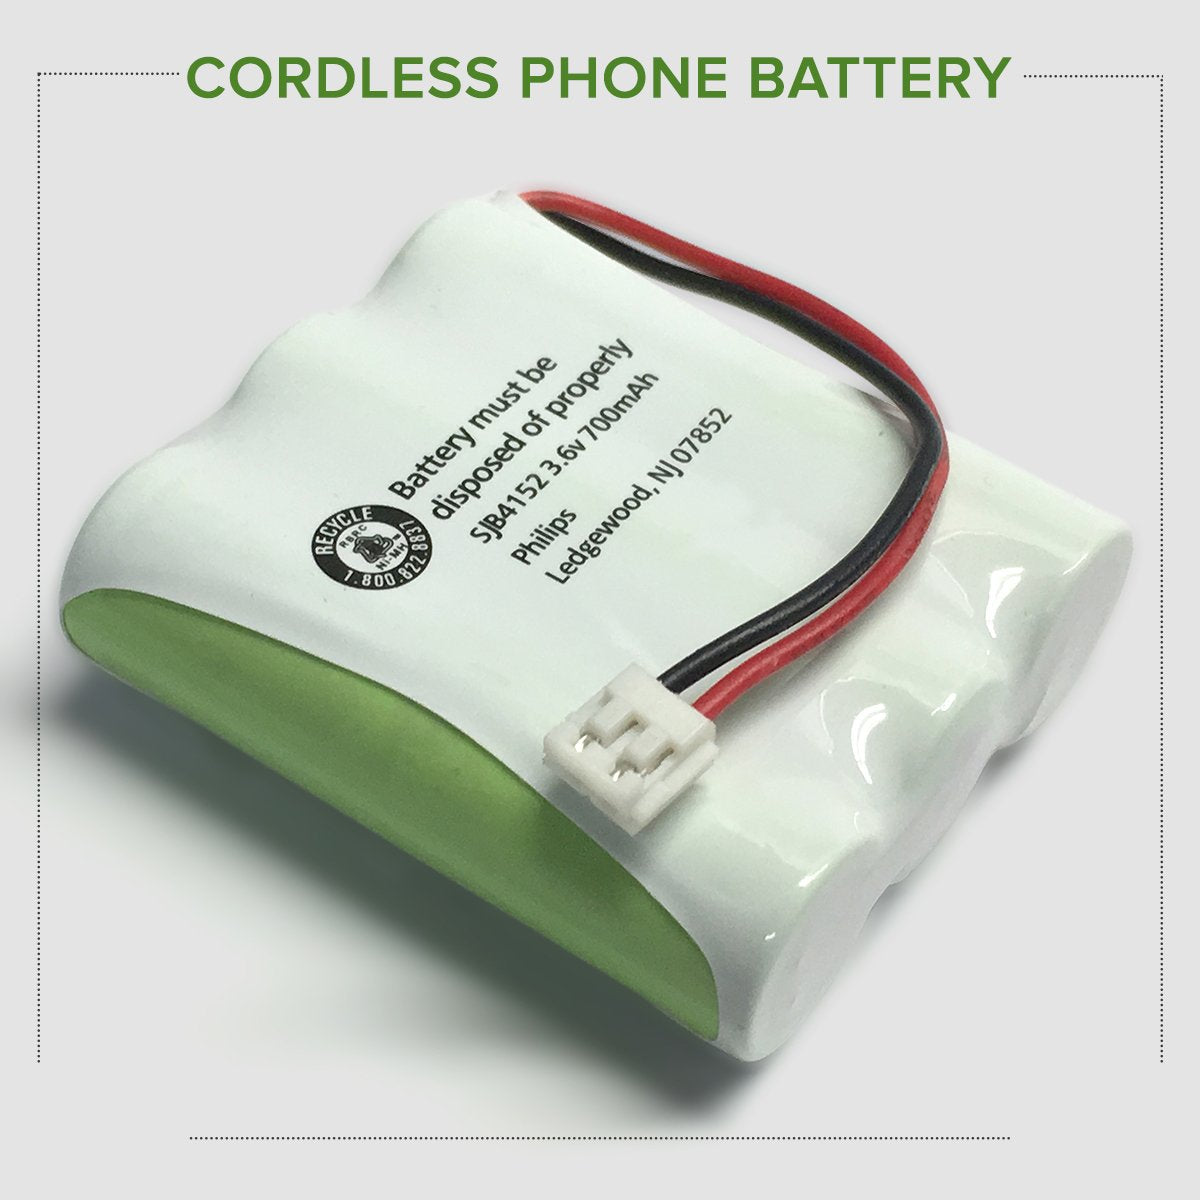 GE 2-6990GE1 Cordless Phone Battery